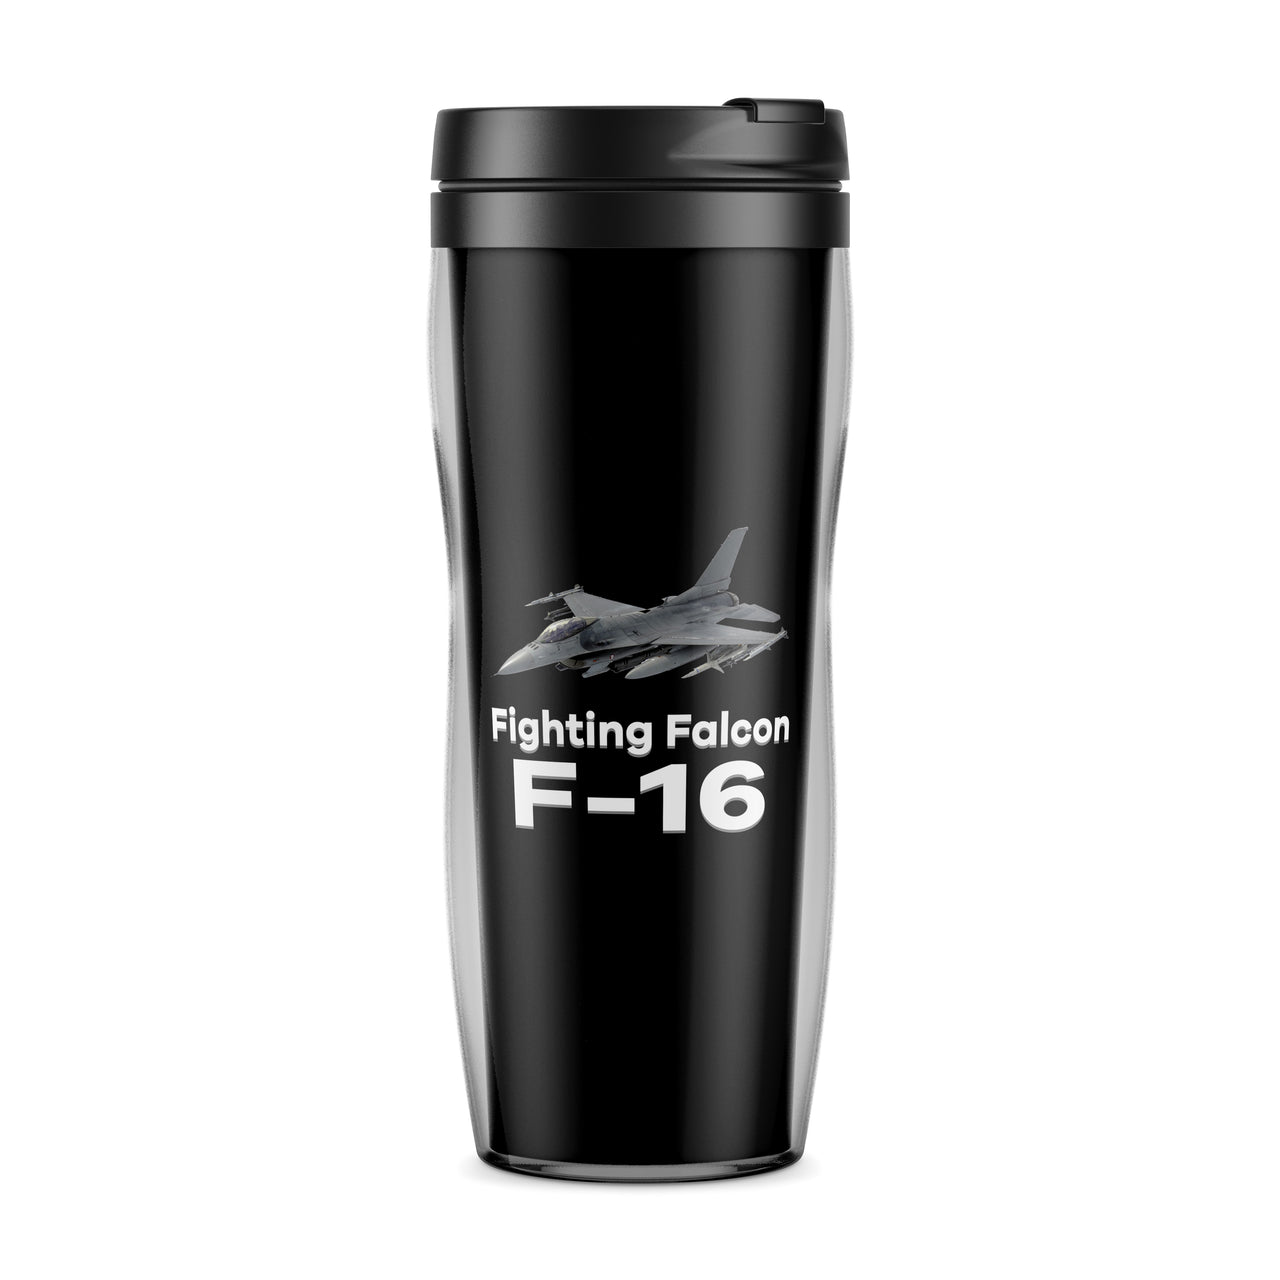 The Fighting Falcon F16 Designed Travel Mugs